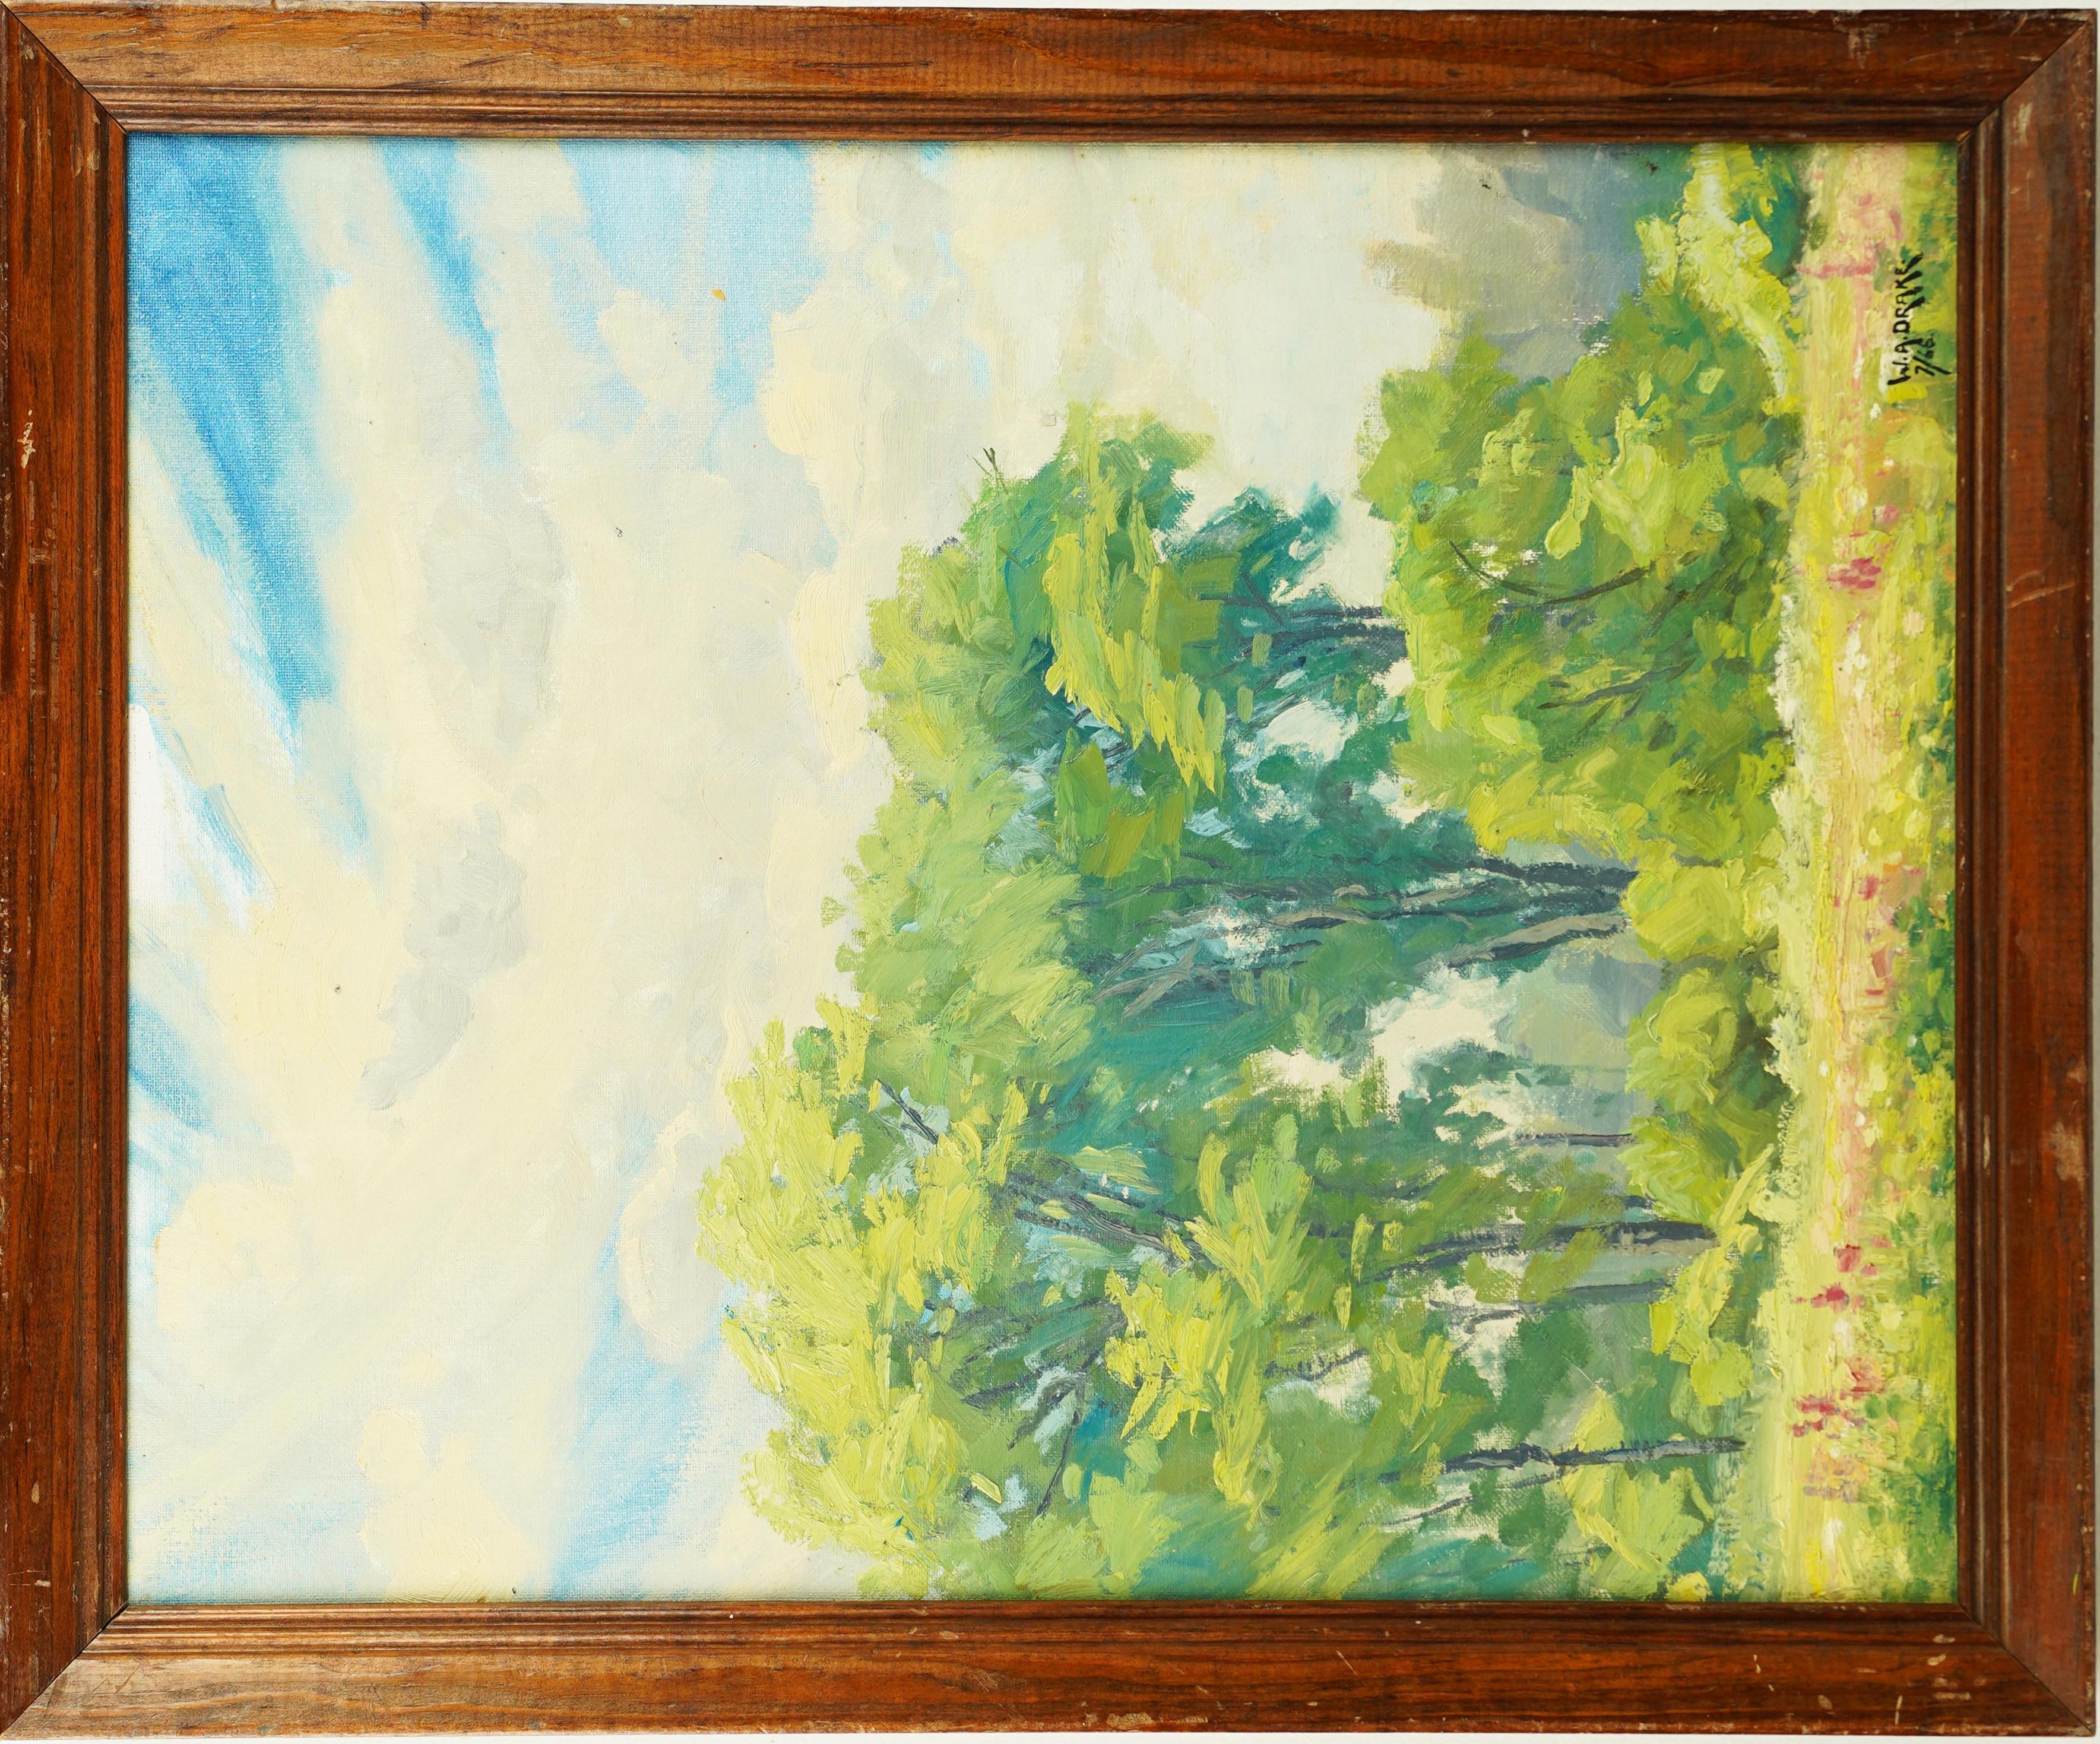 Antique American impressionist signed landscape oil painting.  Oil on canvasboard.  Signed.  Framed.  Image size, 16L x 20H.